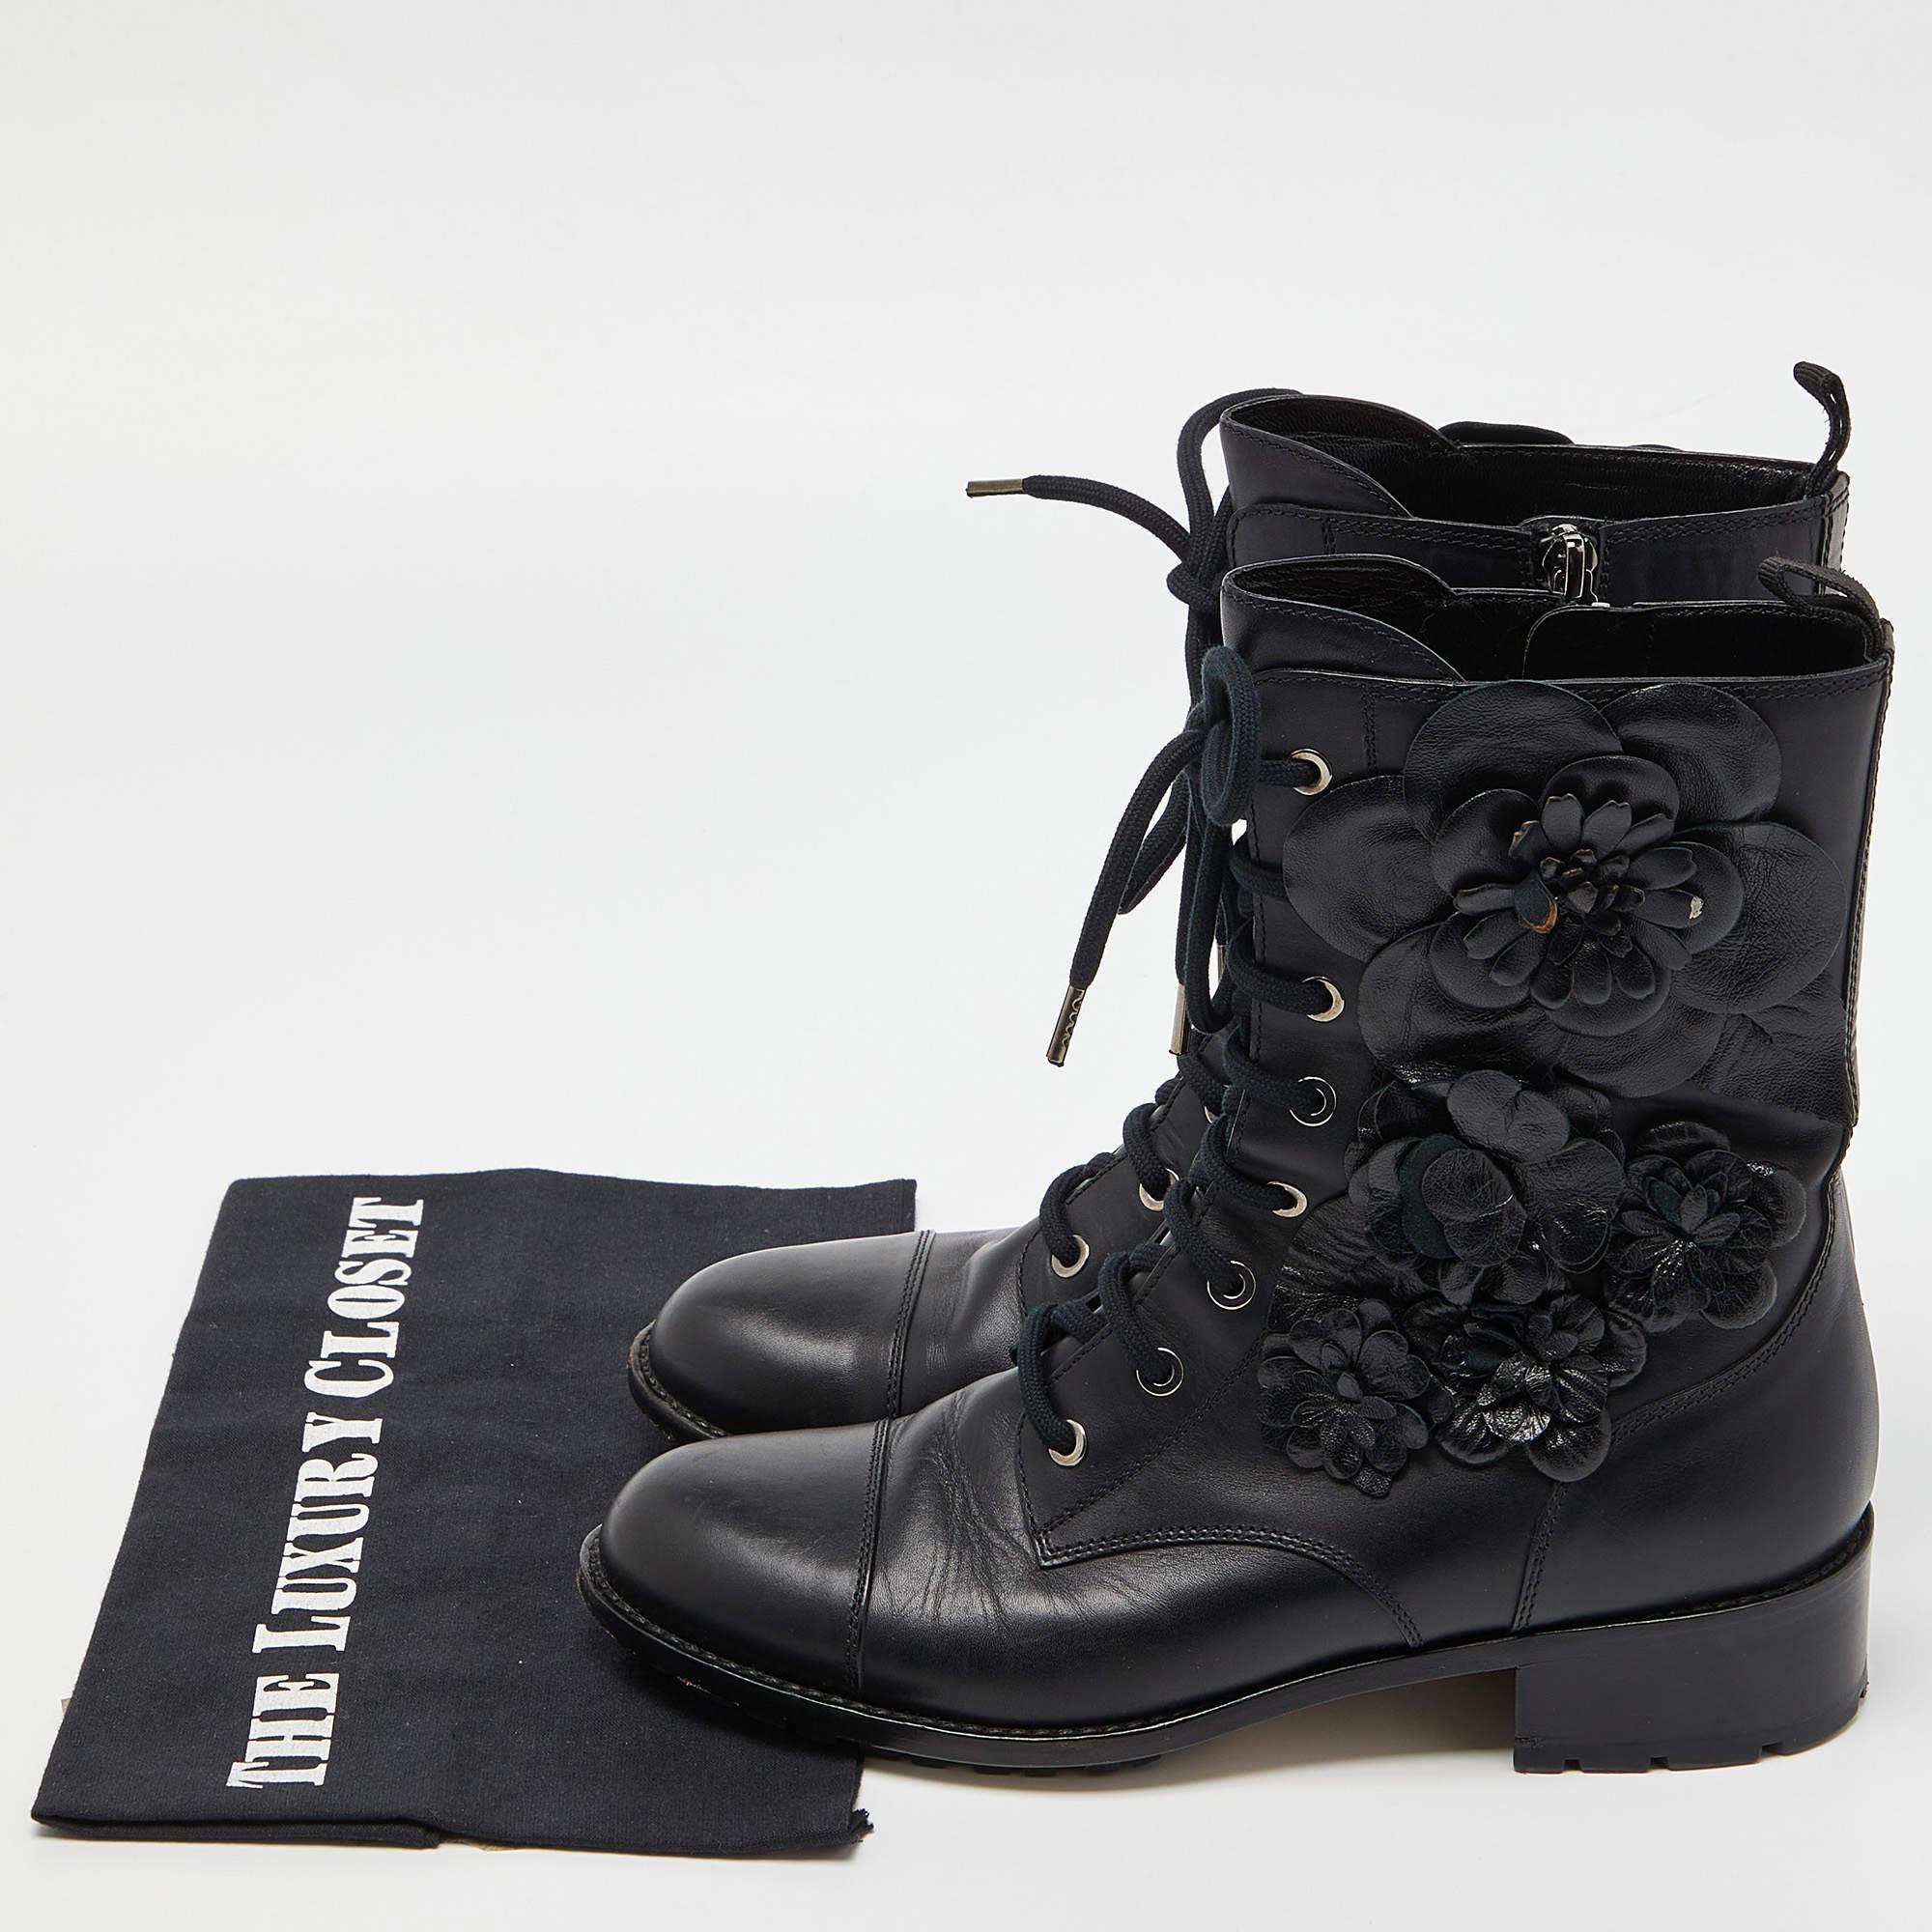 Valentino Black Leather Floral Applique Combat Boots  5